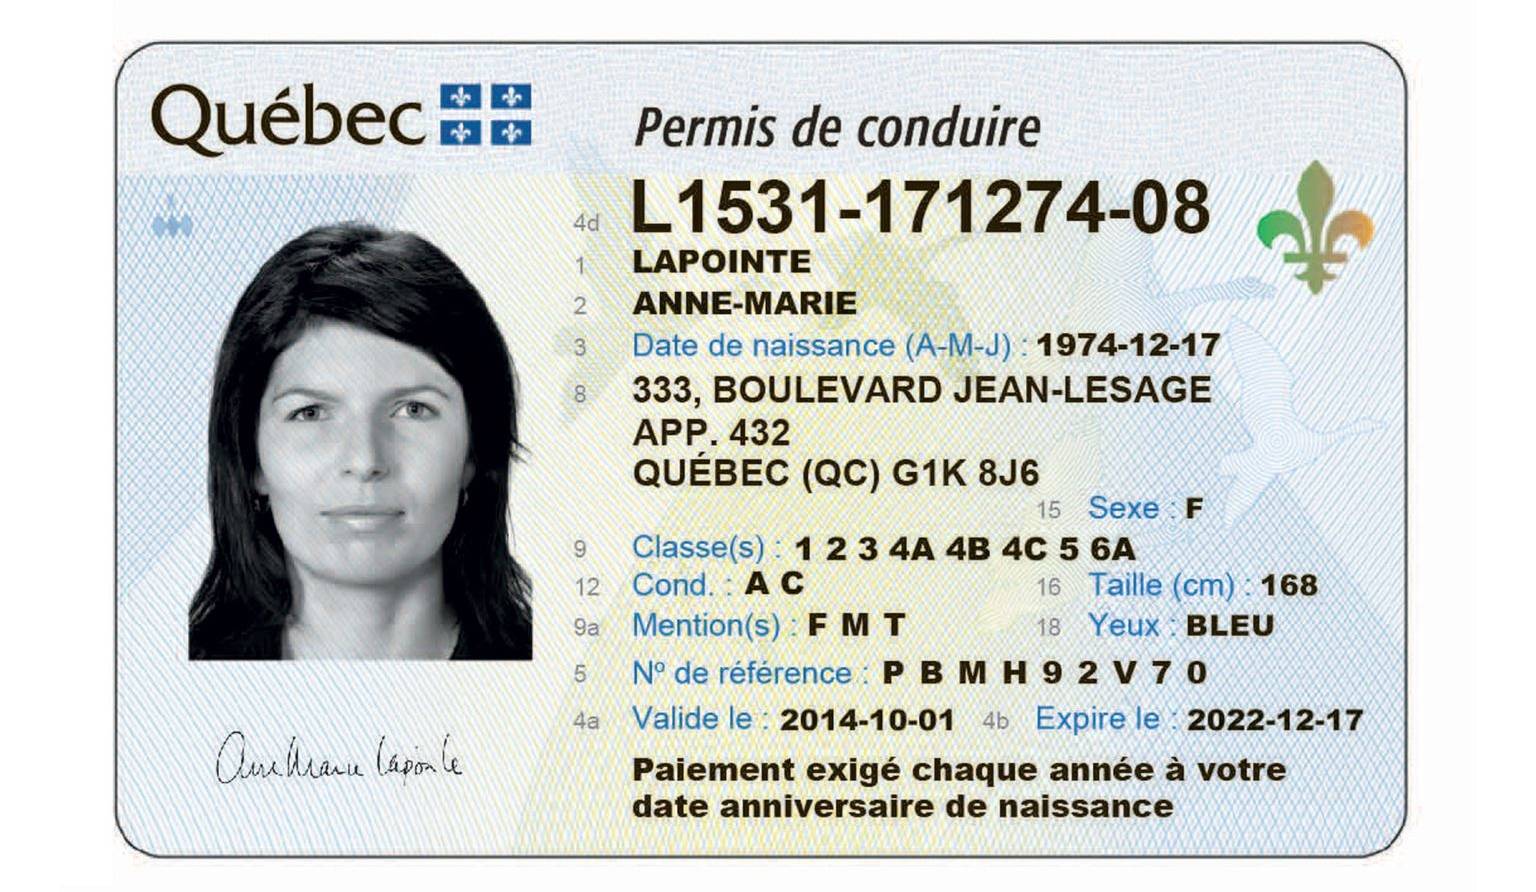 Obtenir un permis de conduire au Québec